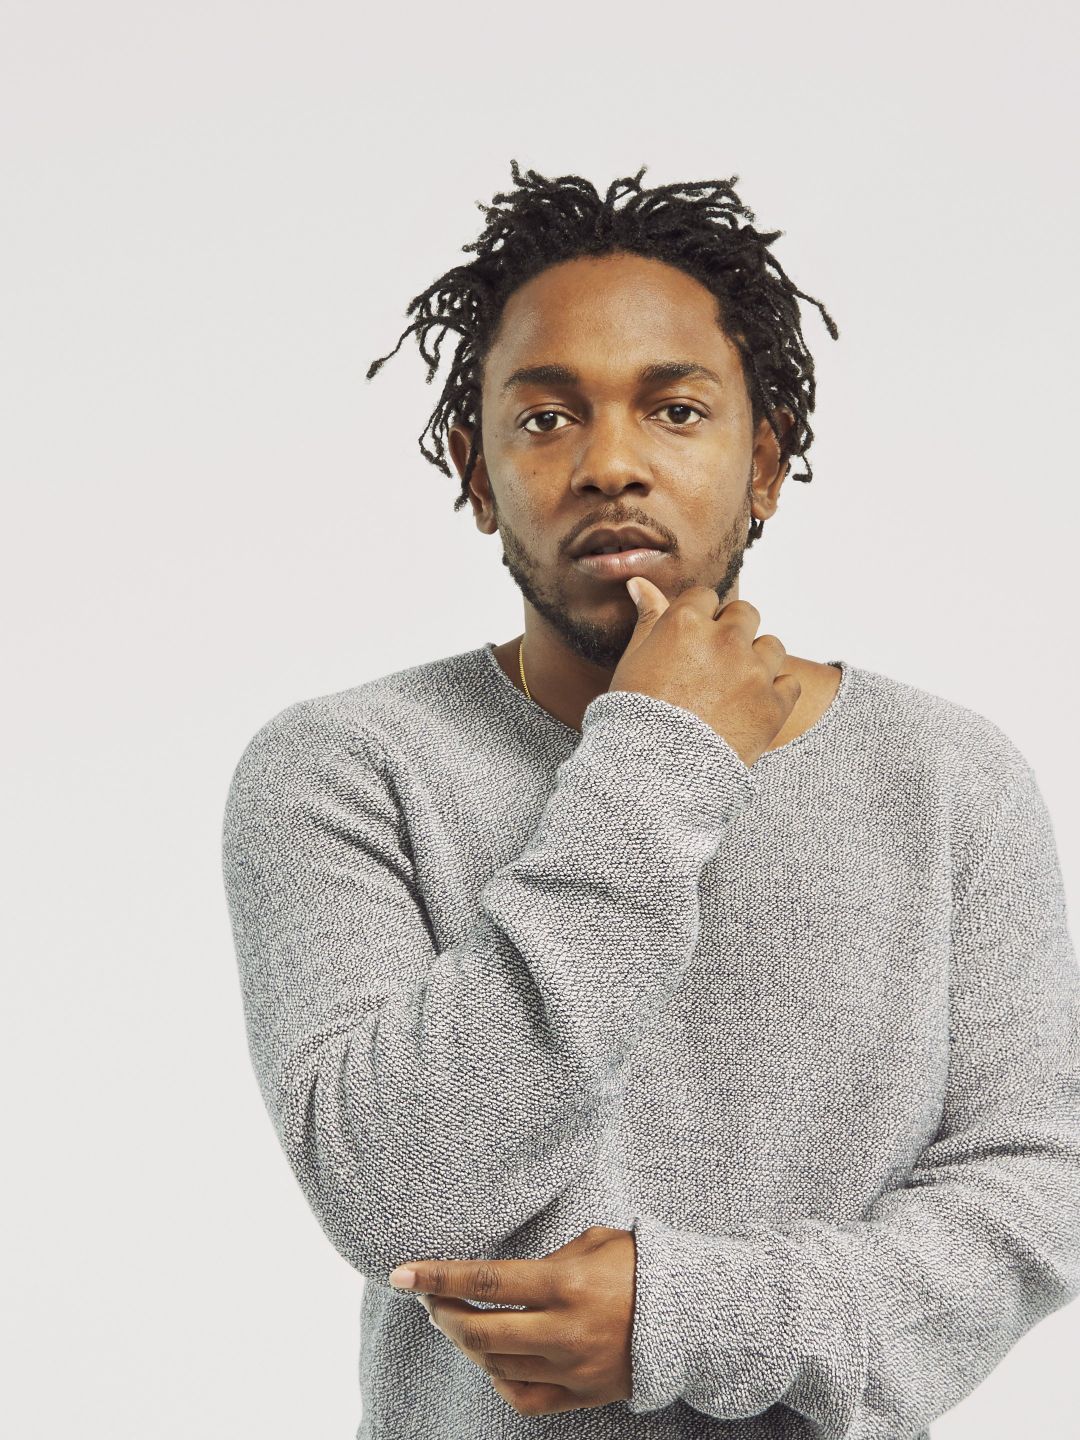 Kendrick Lamar net worth